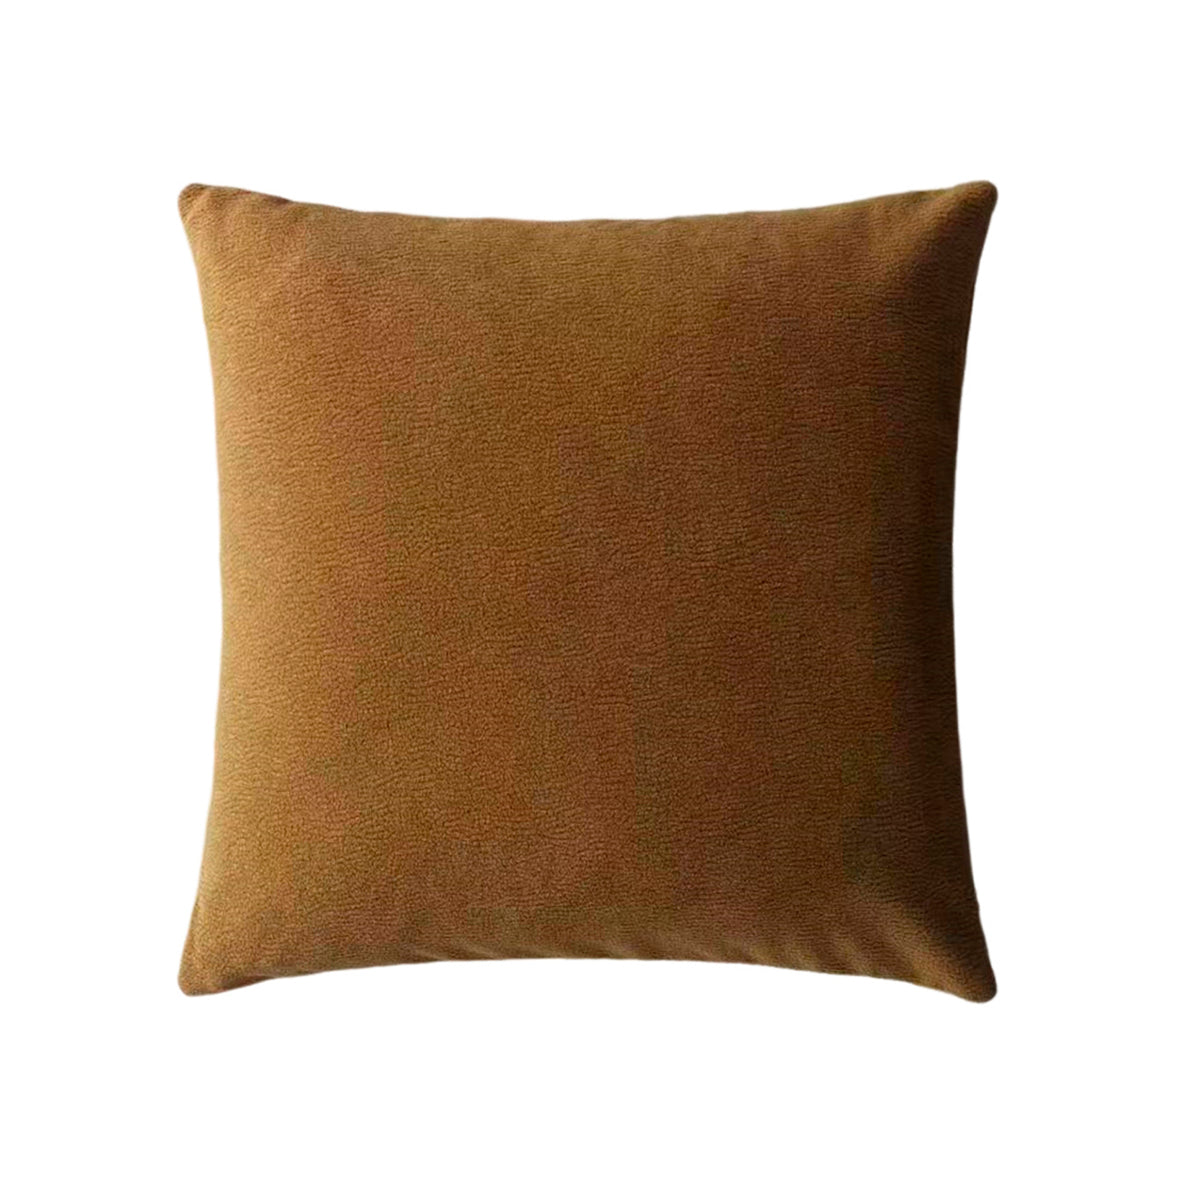 Cushion cover Yara Mustard yellow - 45 x 45 cm